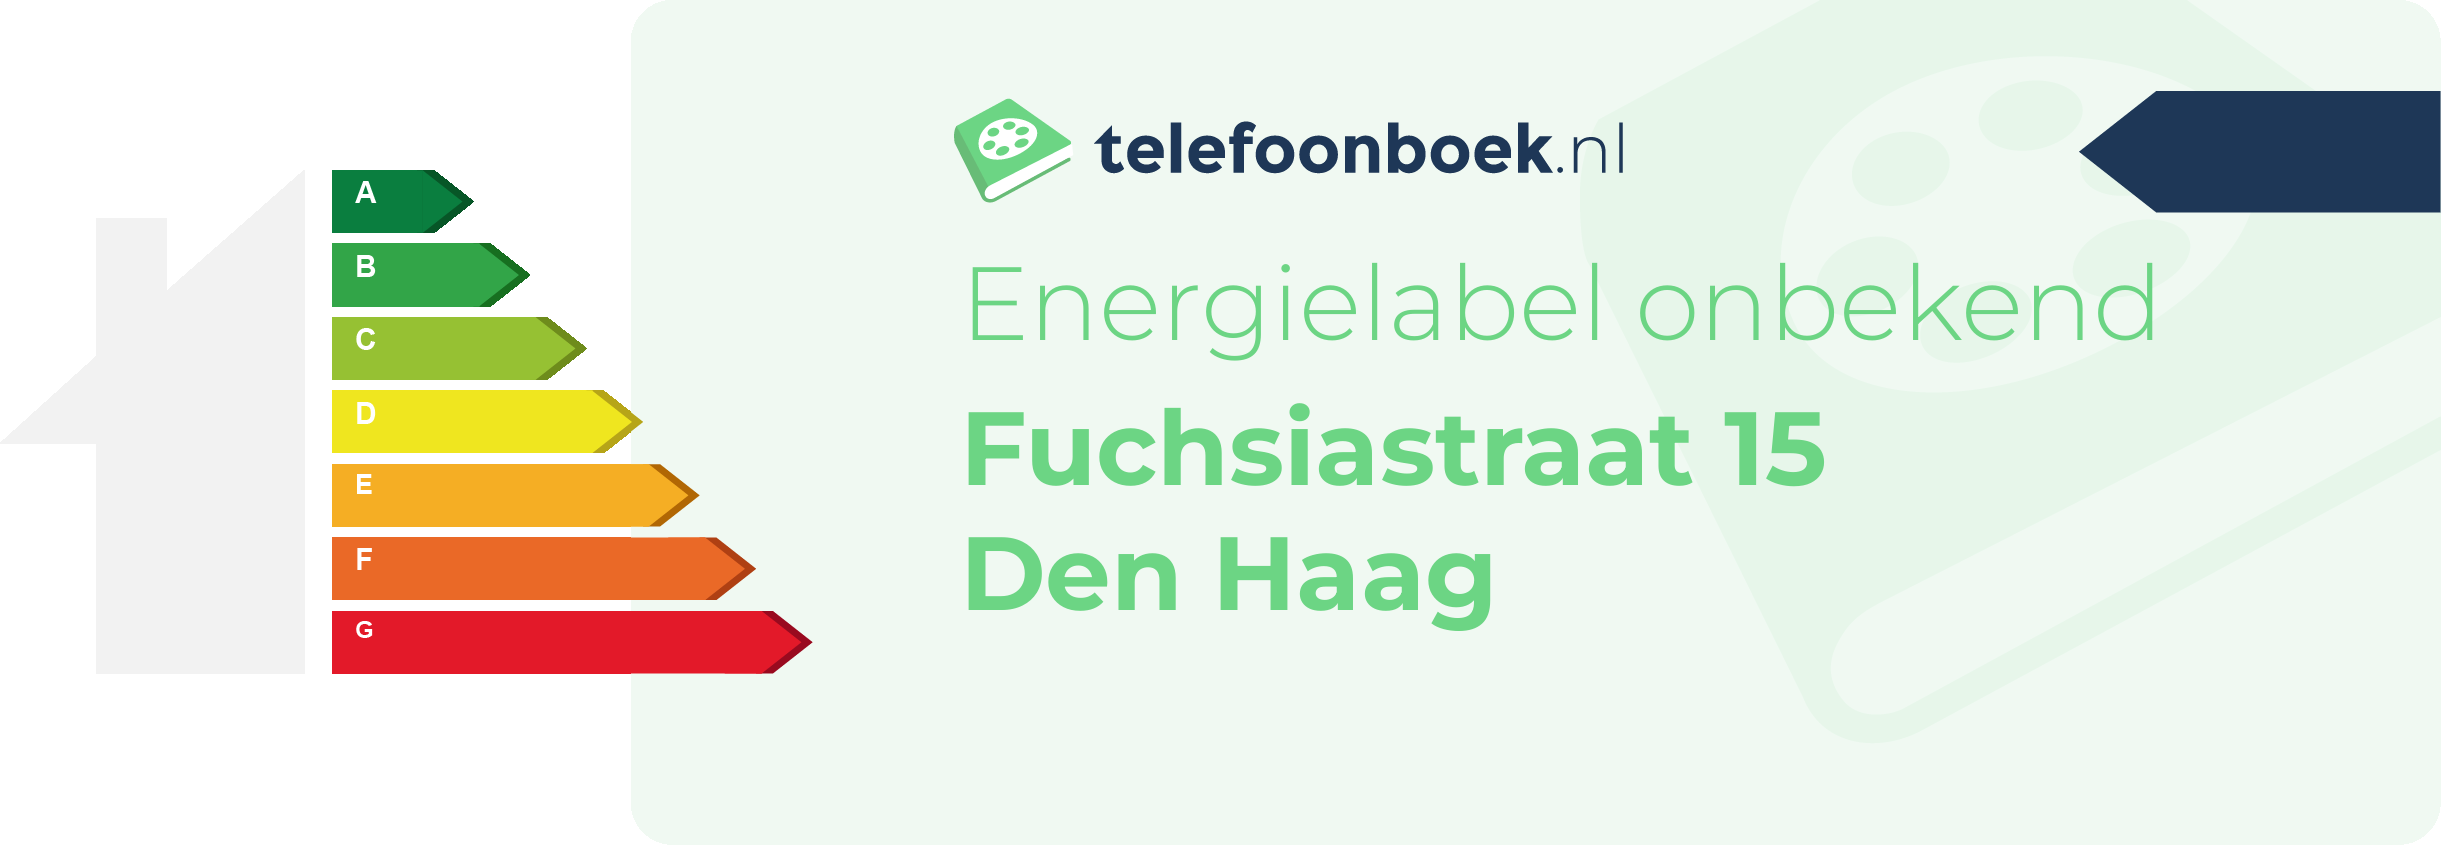 Energielabel Fuchsiastraat 15 Den Haag